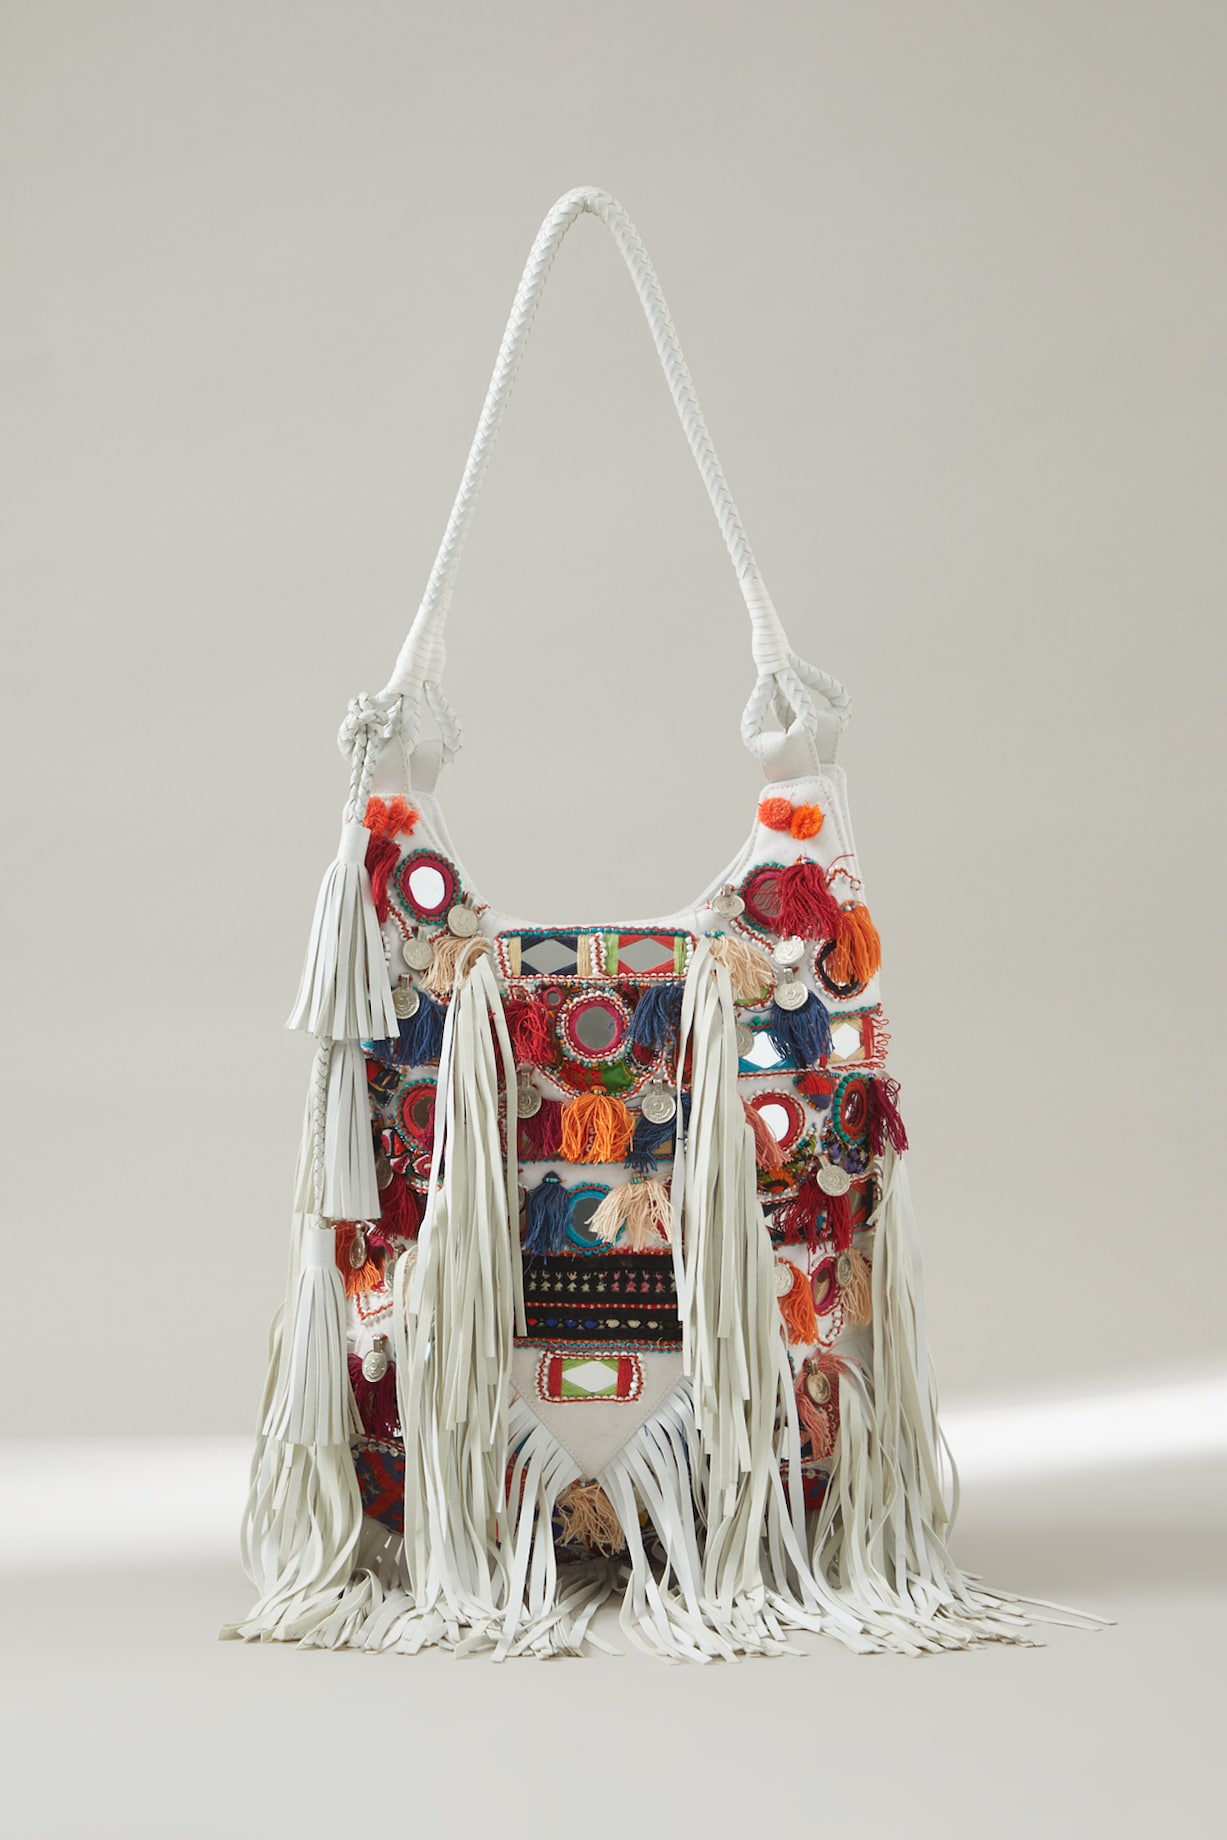 Embroidery Bags Indian Bag Banjara Bag Vintage Boho Bag -  Hong Kong